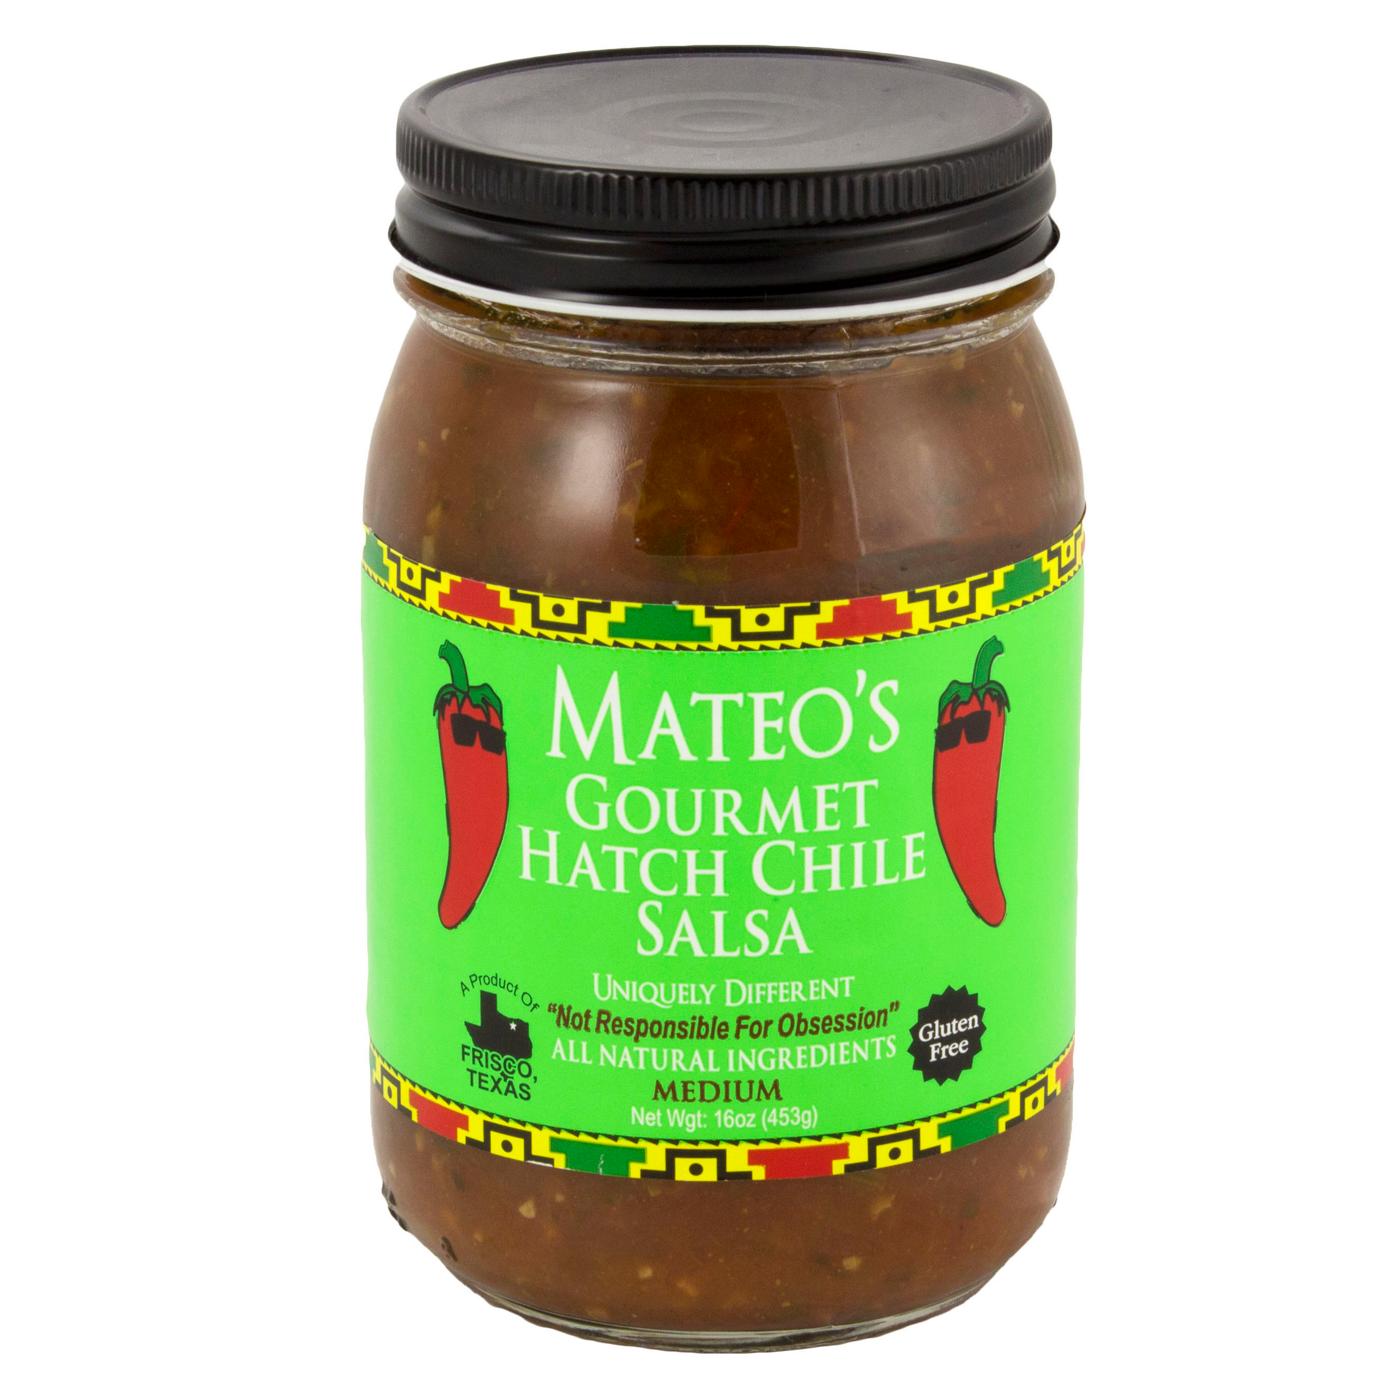 Mateo's Medium Gourmet Hatch Chile Salsa; image 1 of 2